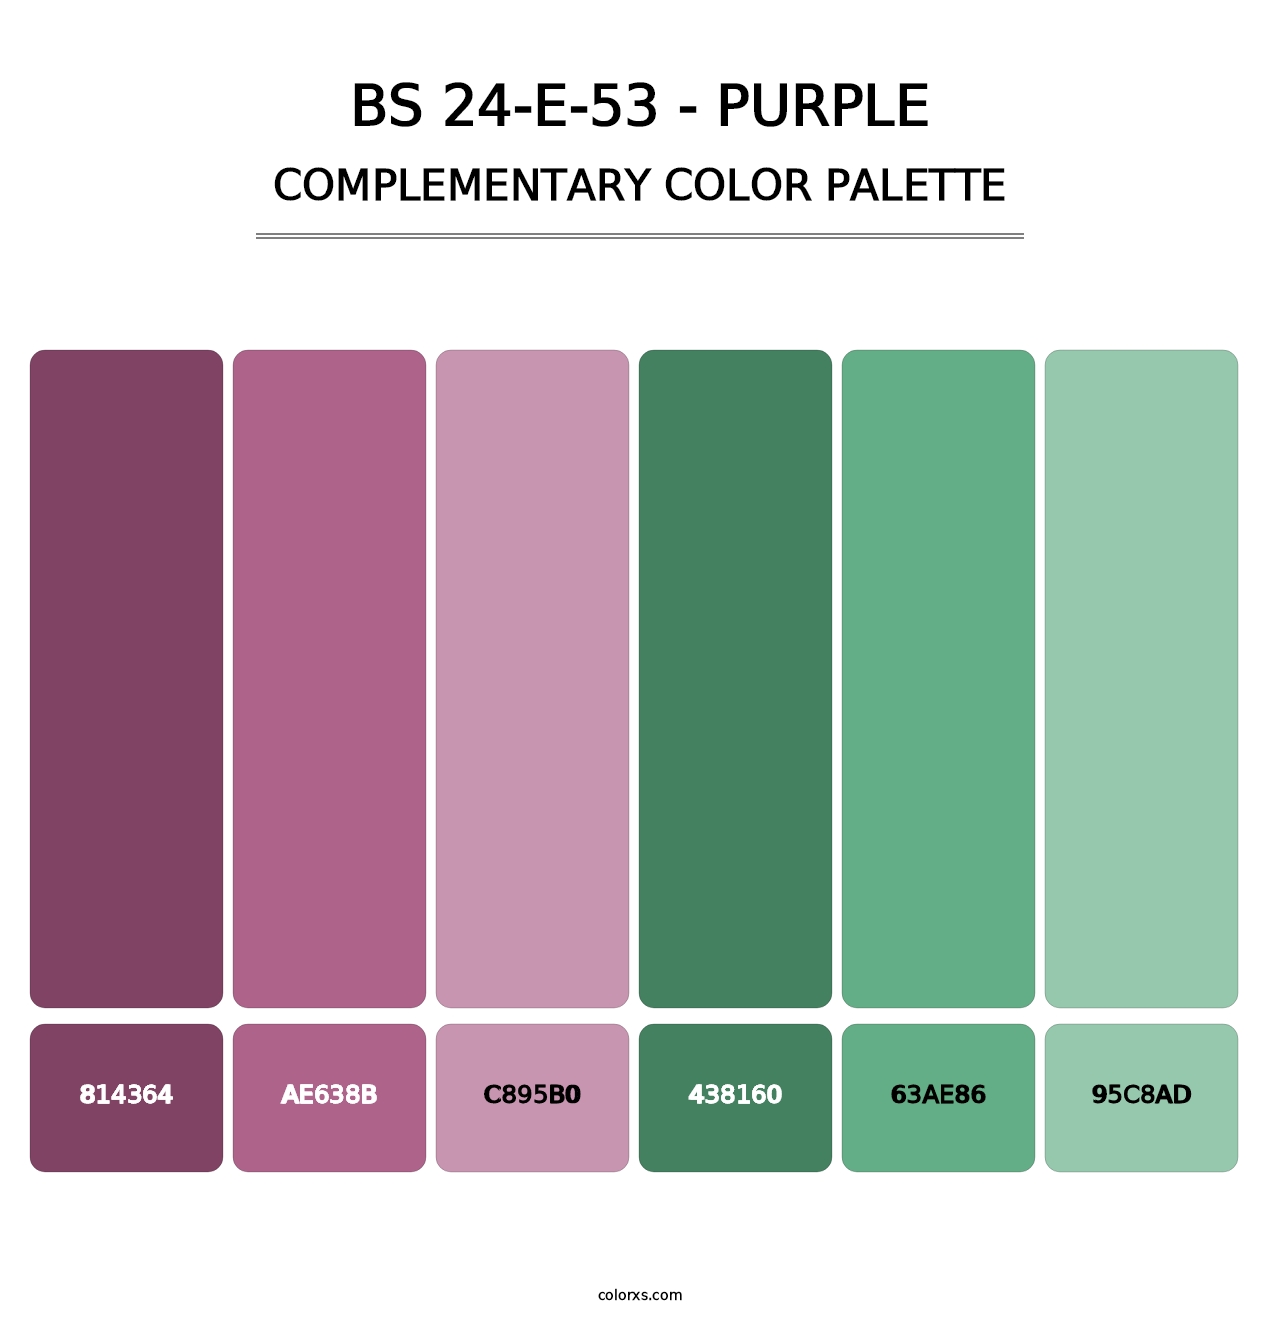 BS 24-E-53 - Purple - Complementary Color Palette